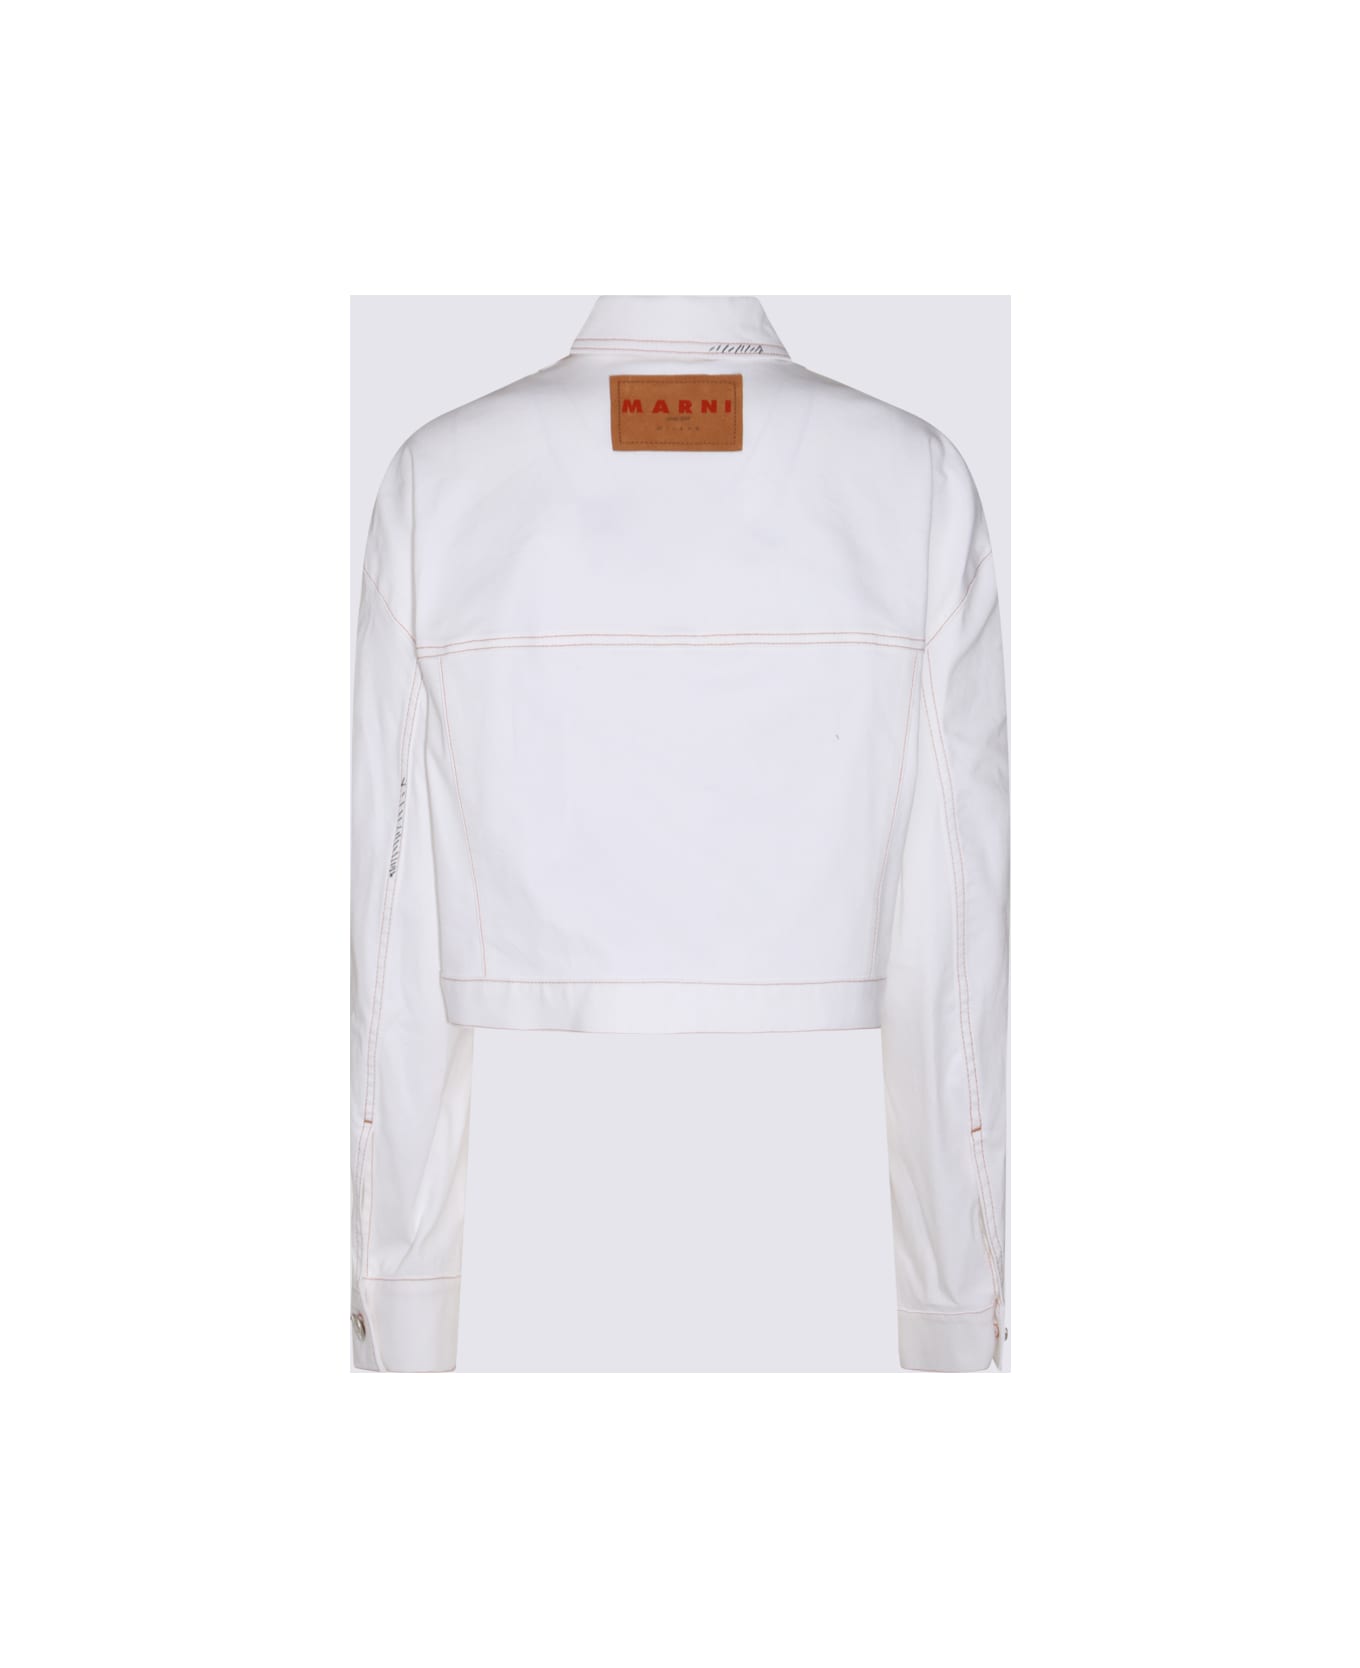 Marni White Cotton Casual Jacket - LILY WHITE